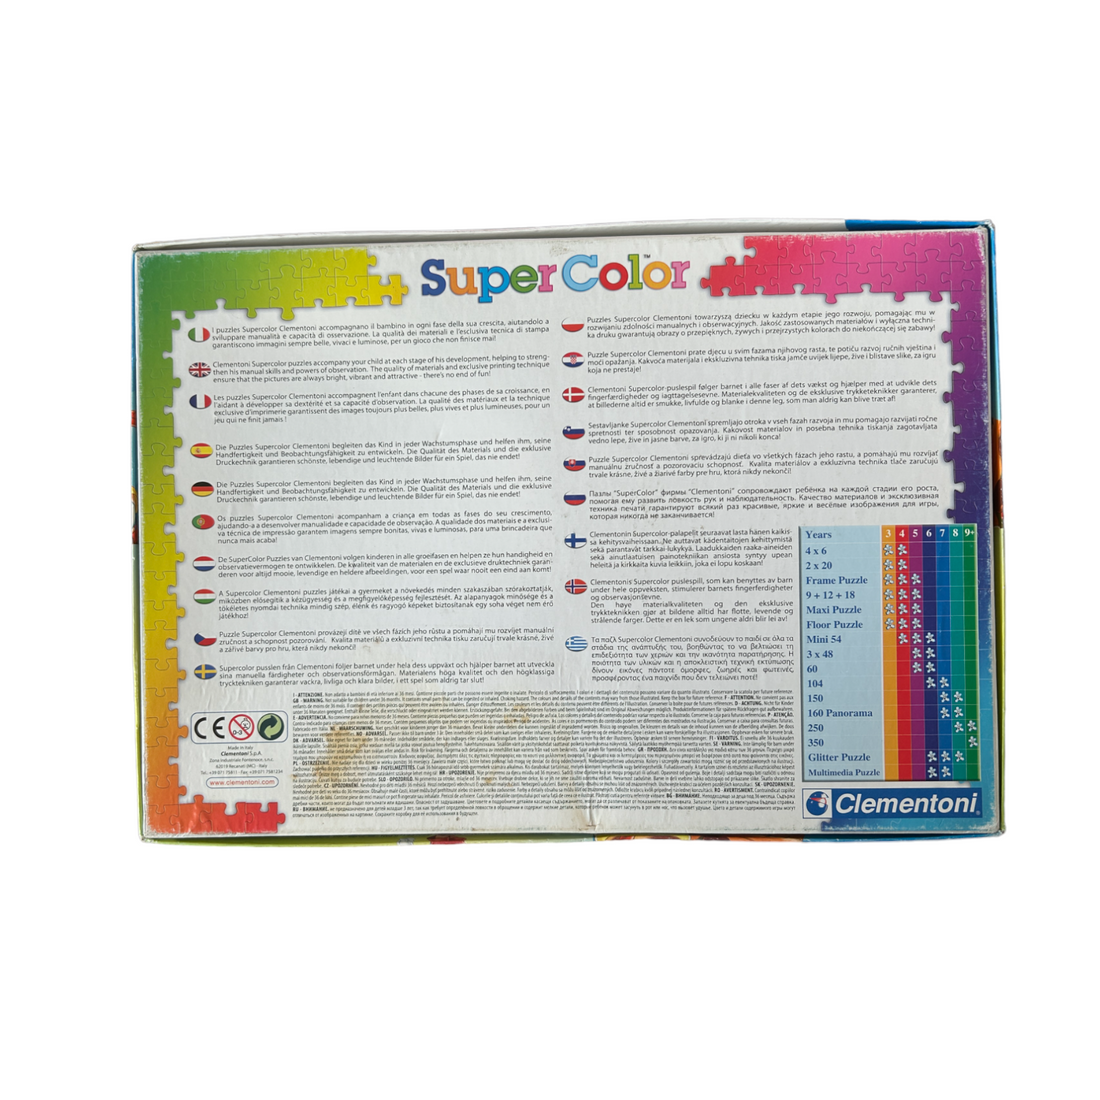 Puzzle Disney - Super Color maxi -104 pièces